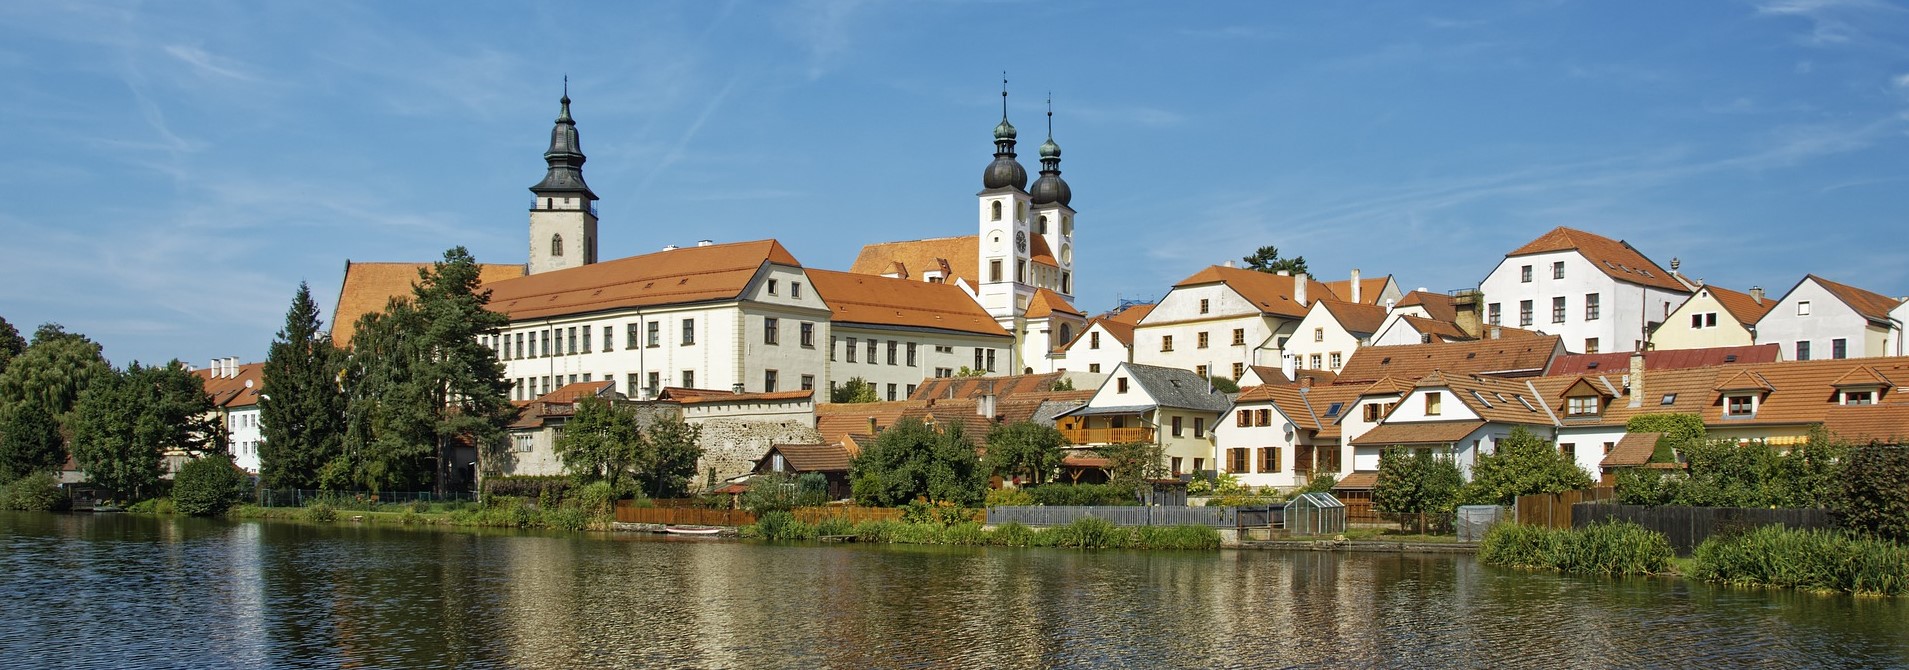 City in the Czech Republic